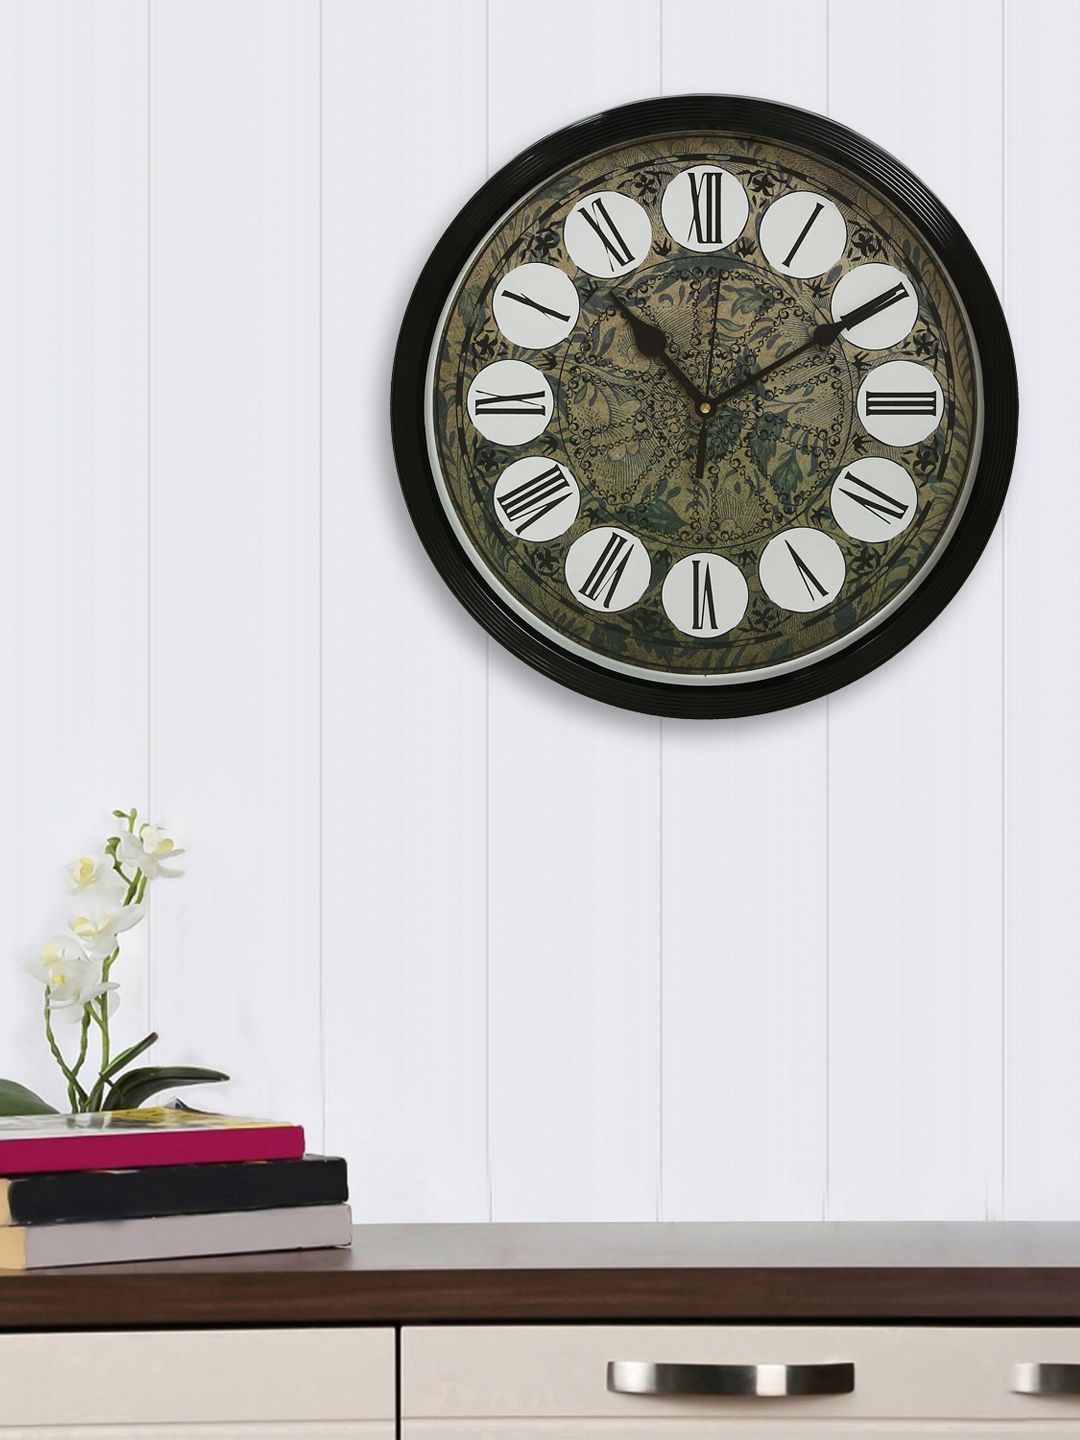 eCraftIndia Black & White Round Printed Analogue Wall Clock 31.7 cm Price in India